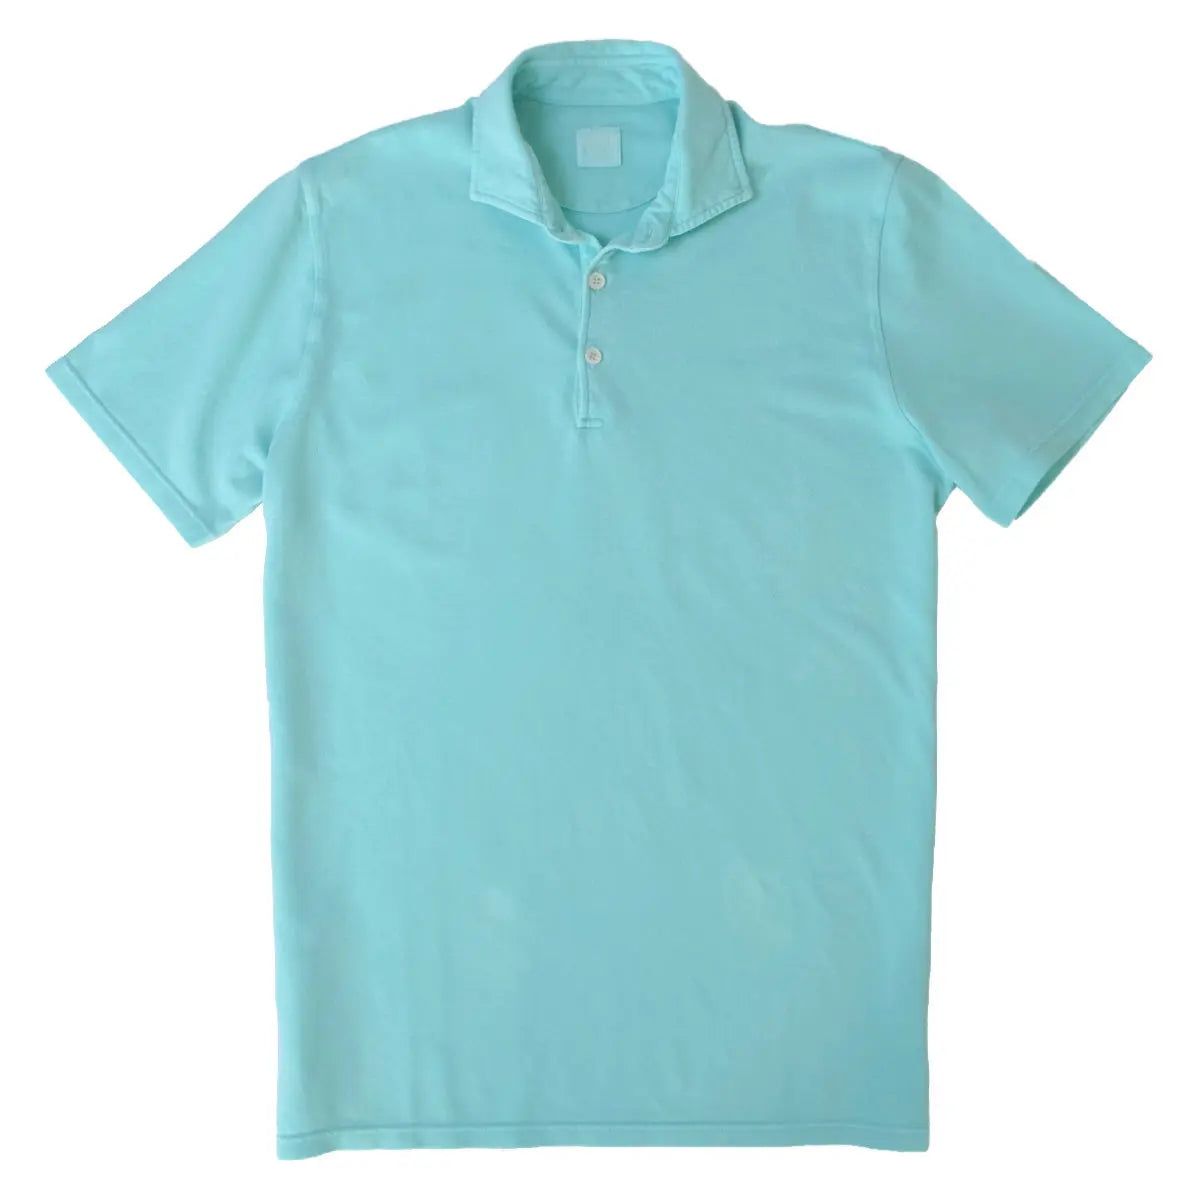 Aqua Blue 100% Cotton Pique Polo Shirt  FEDELI   